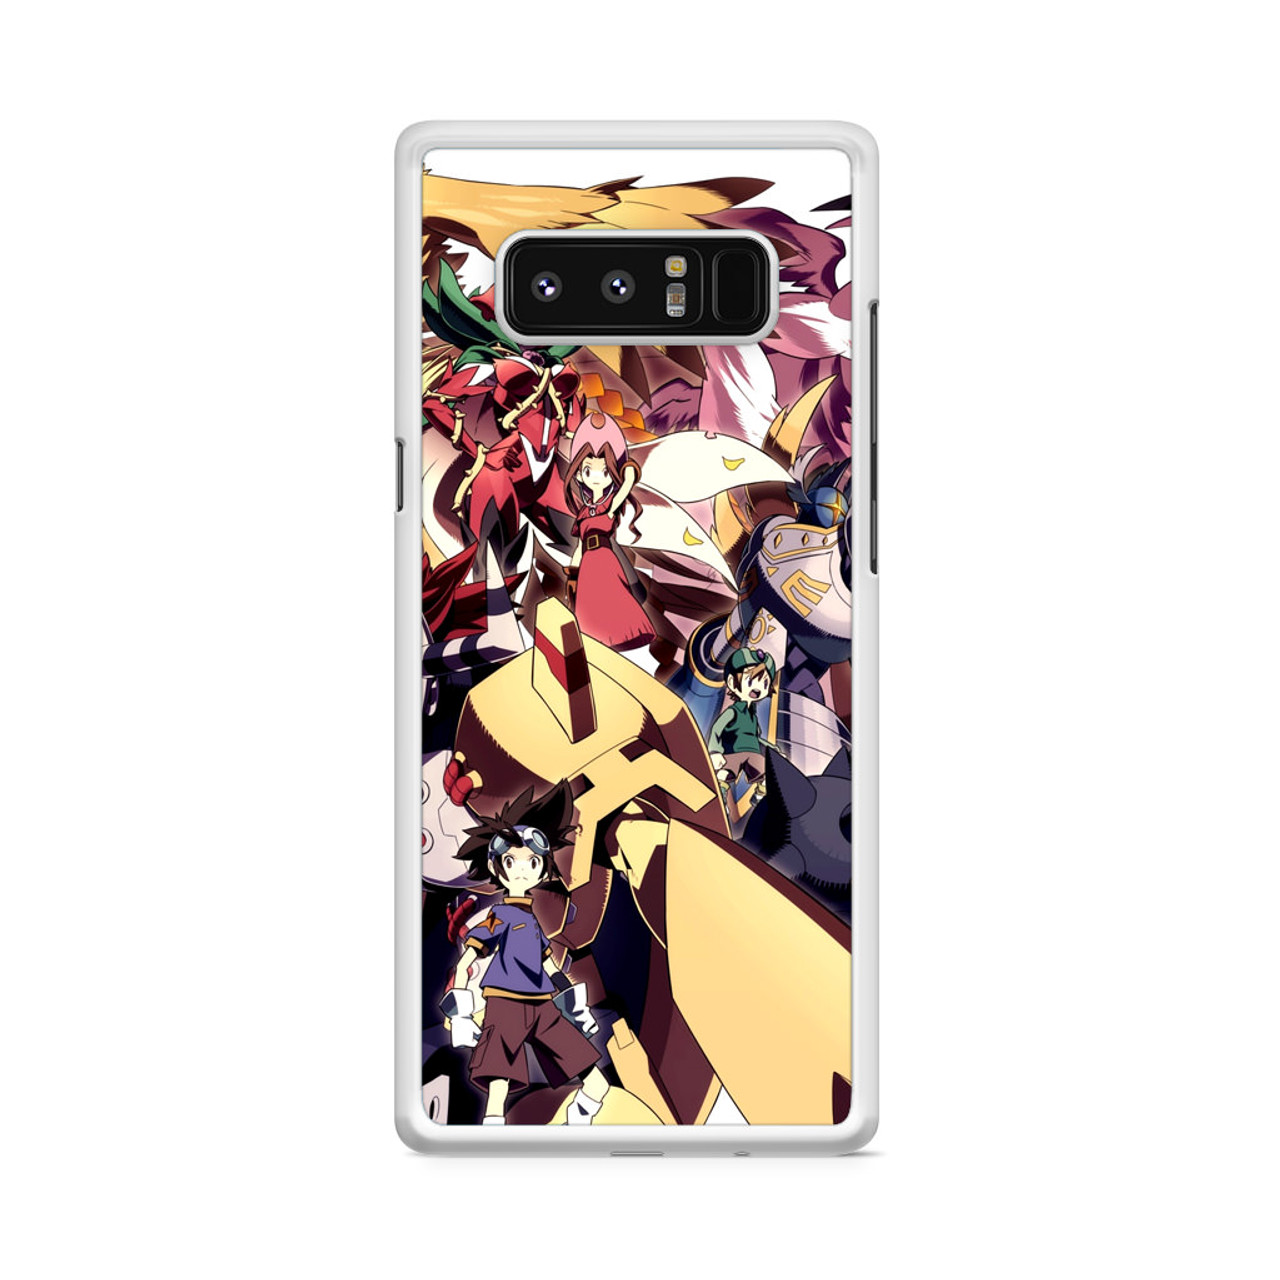 Anime Digimon Samsung Galaxy Note 8 Case Caseshunter